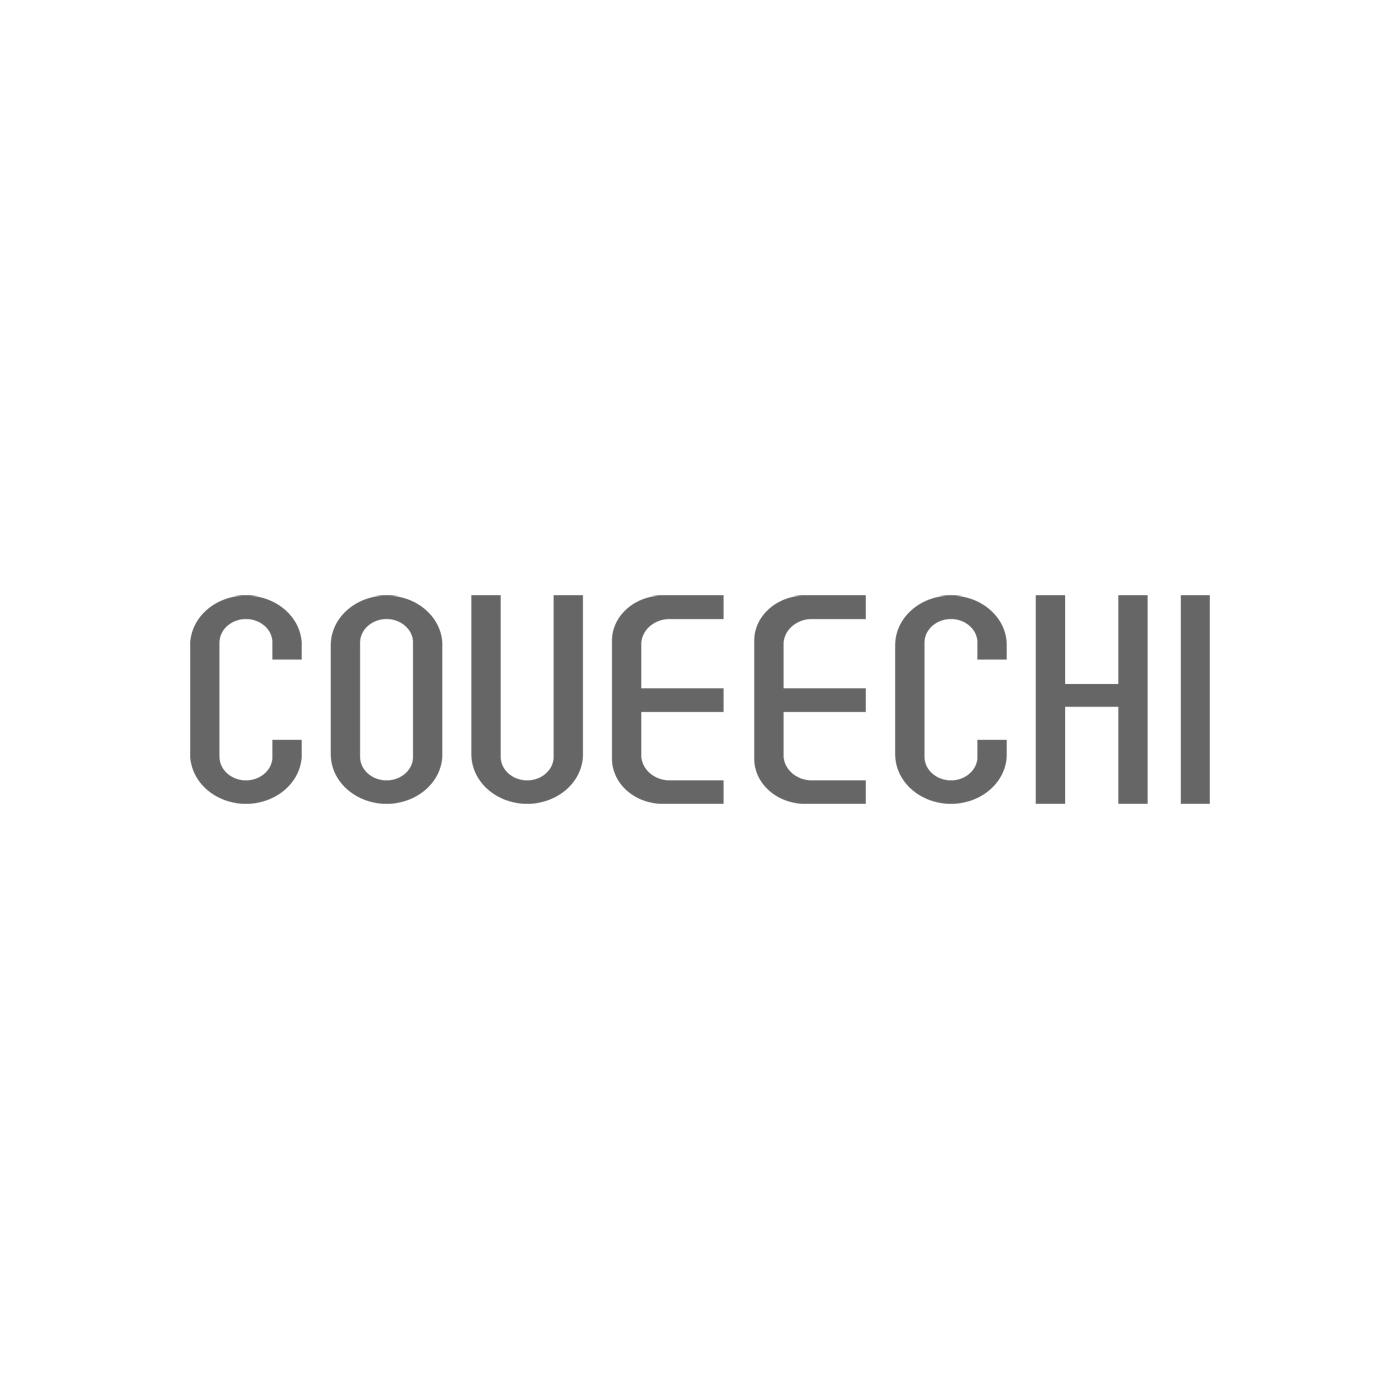 11类-电器灯具COUEECHI商标转让